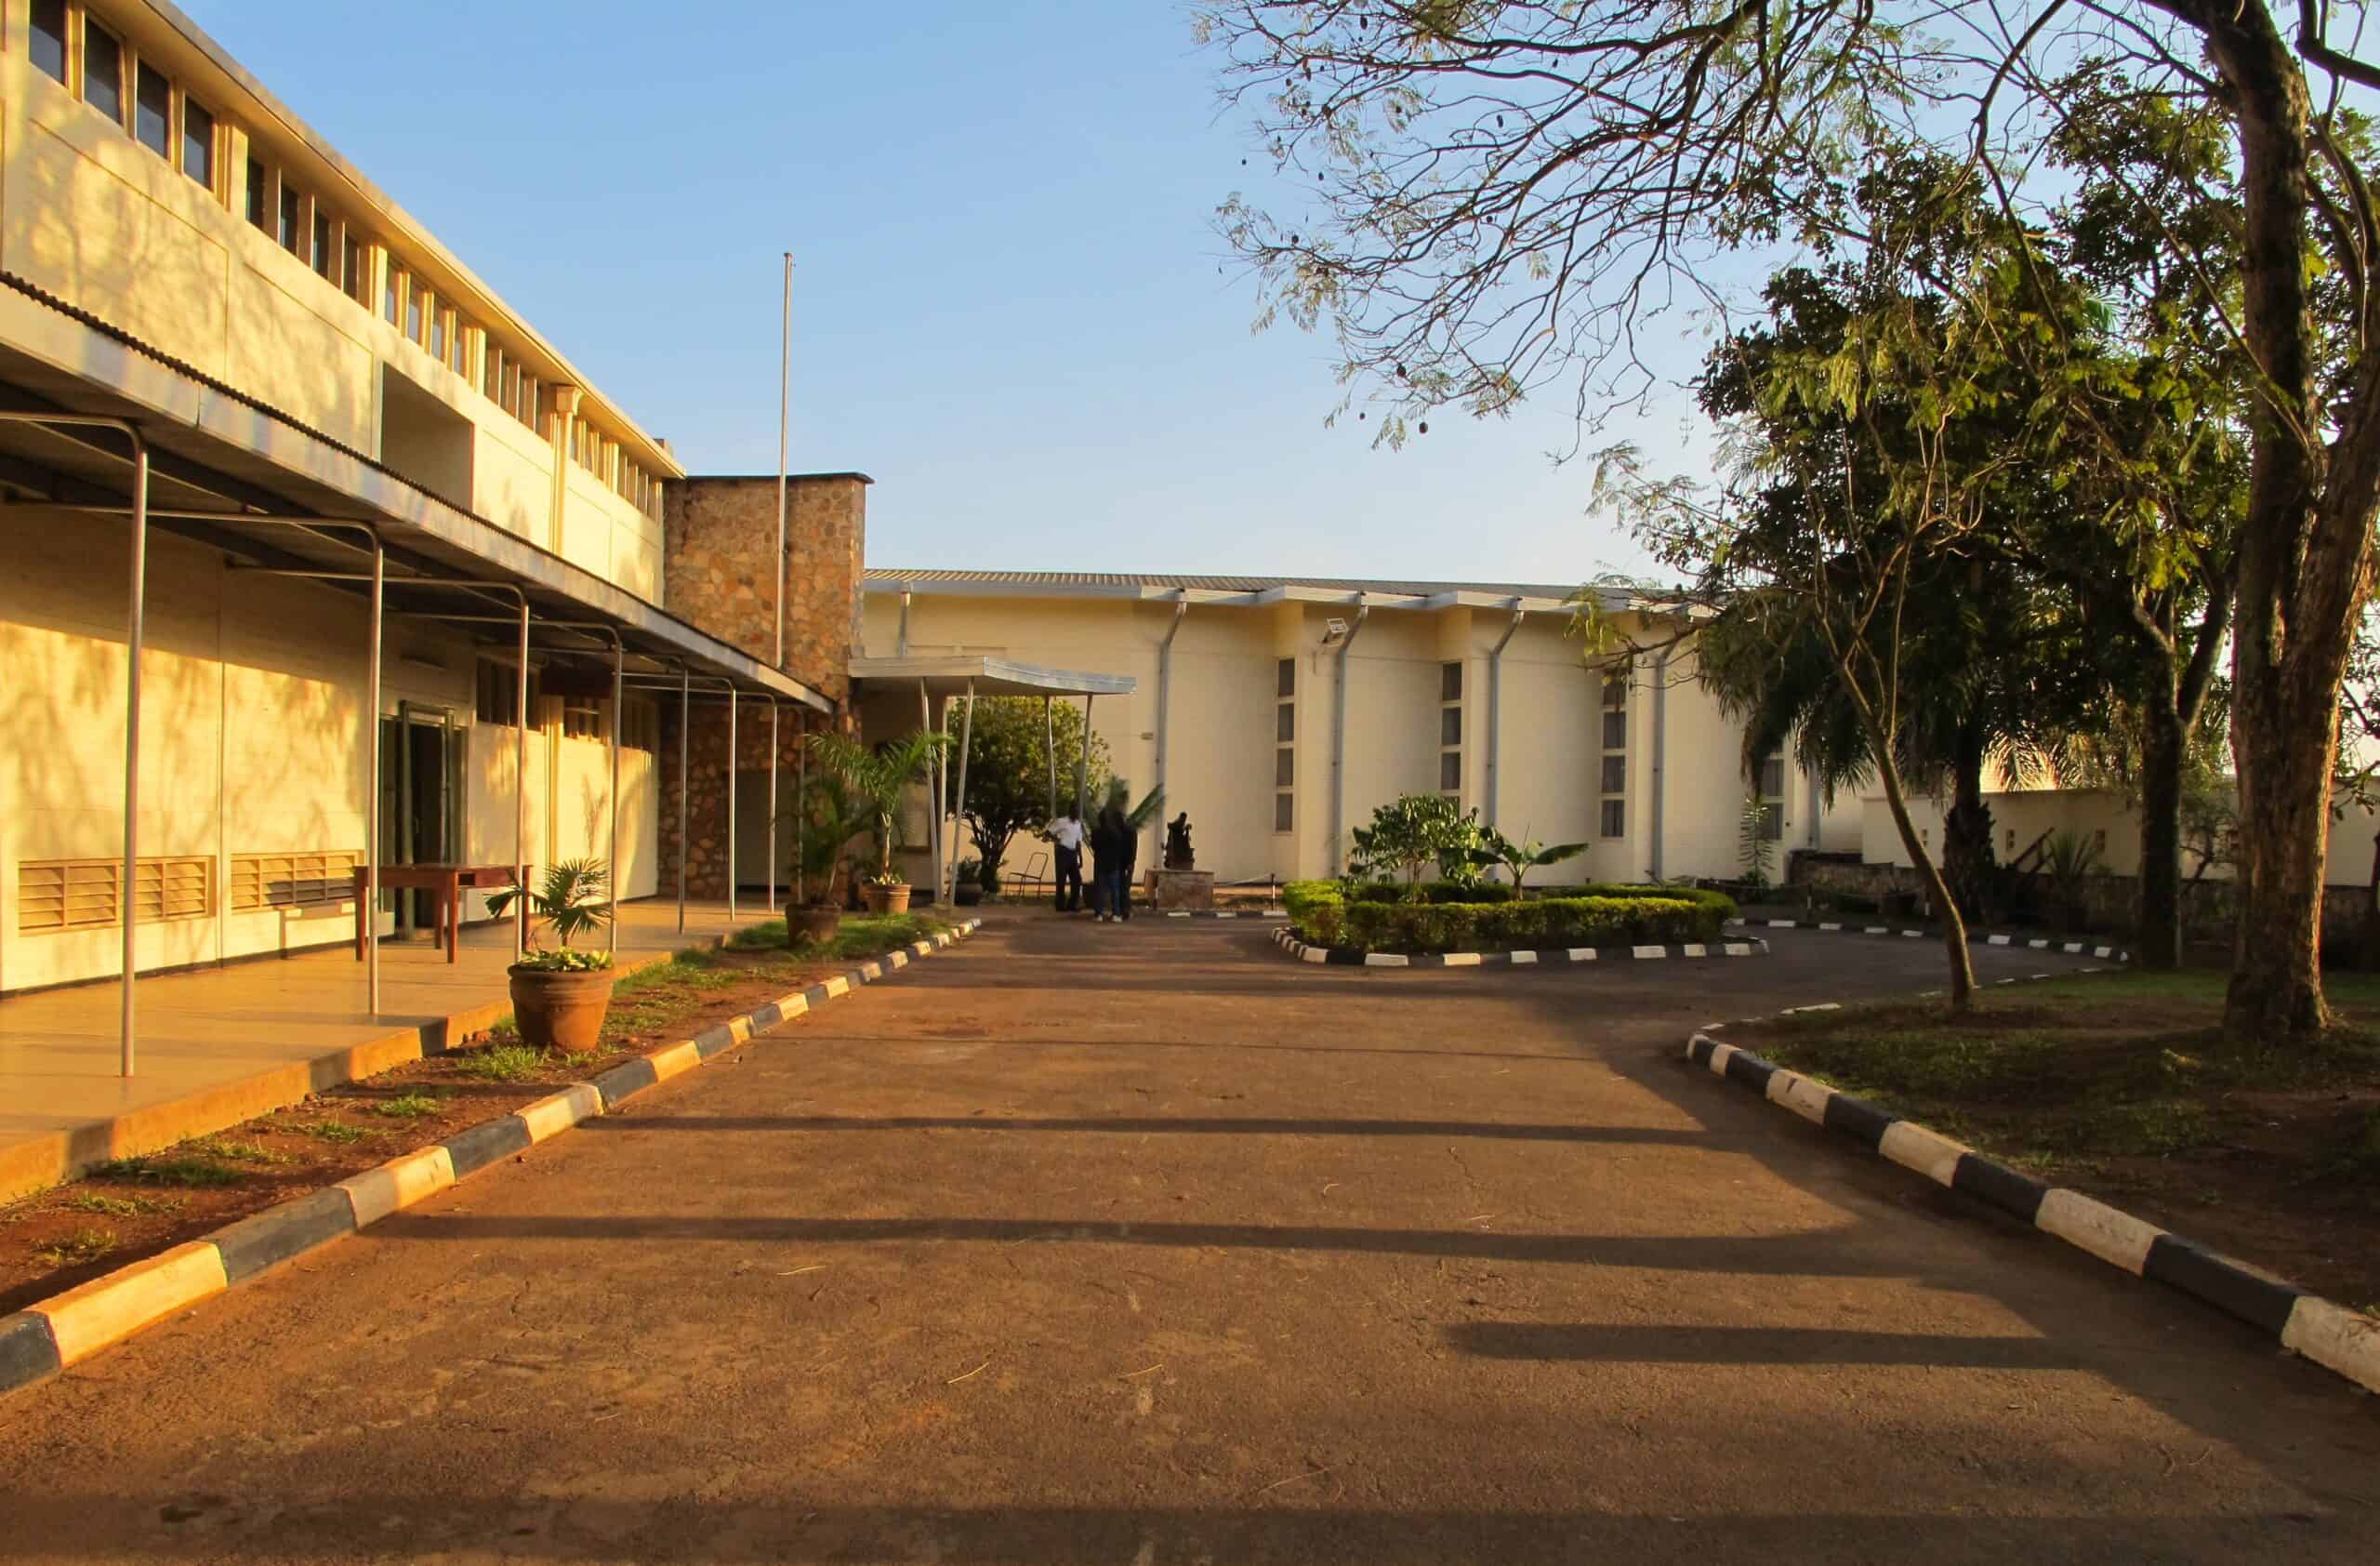 National museum of Uganda